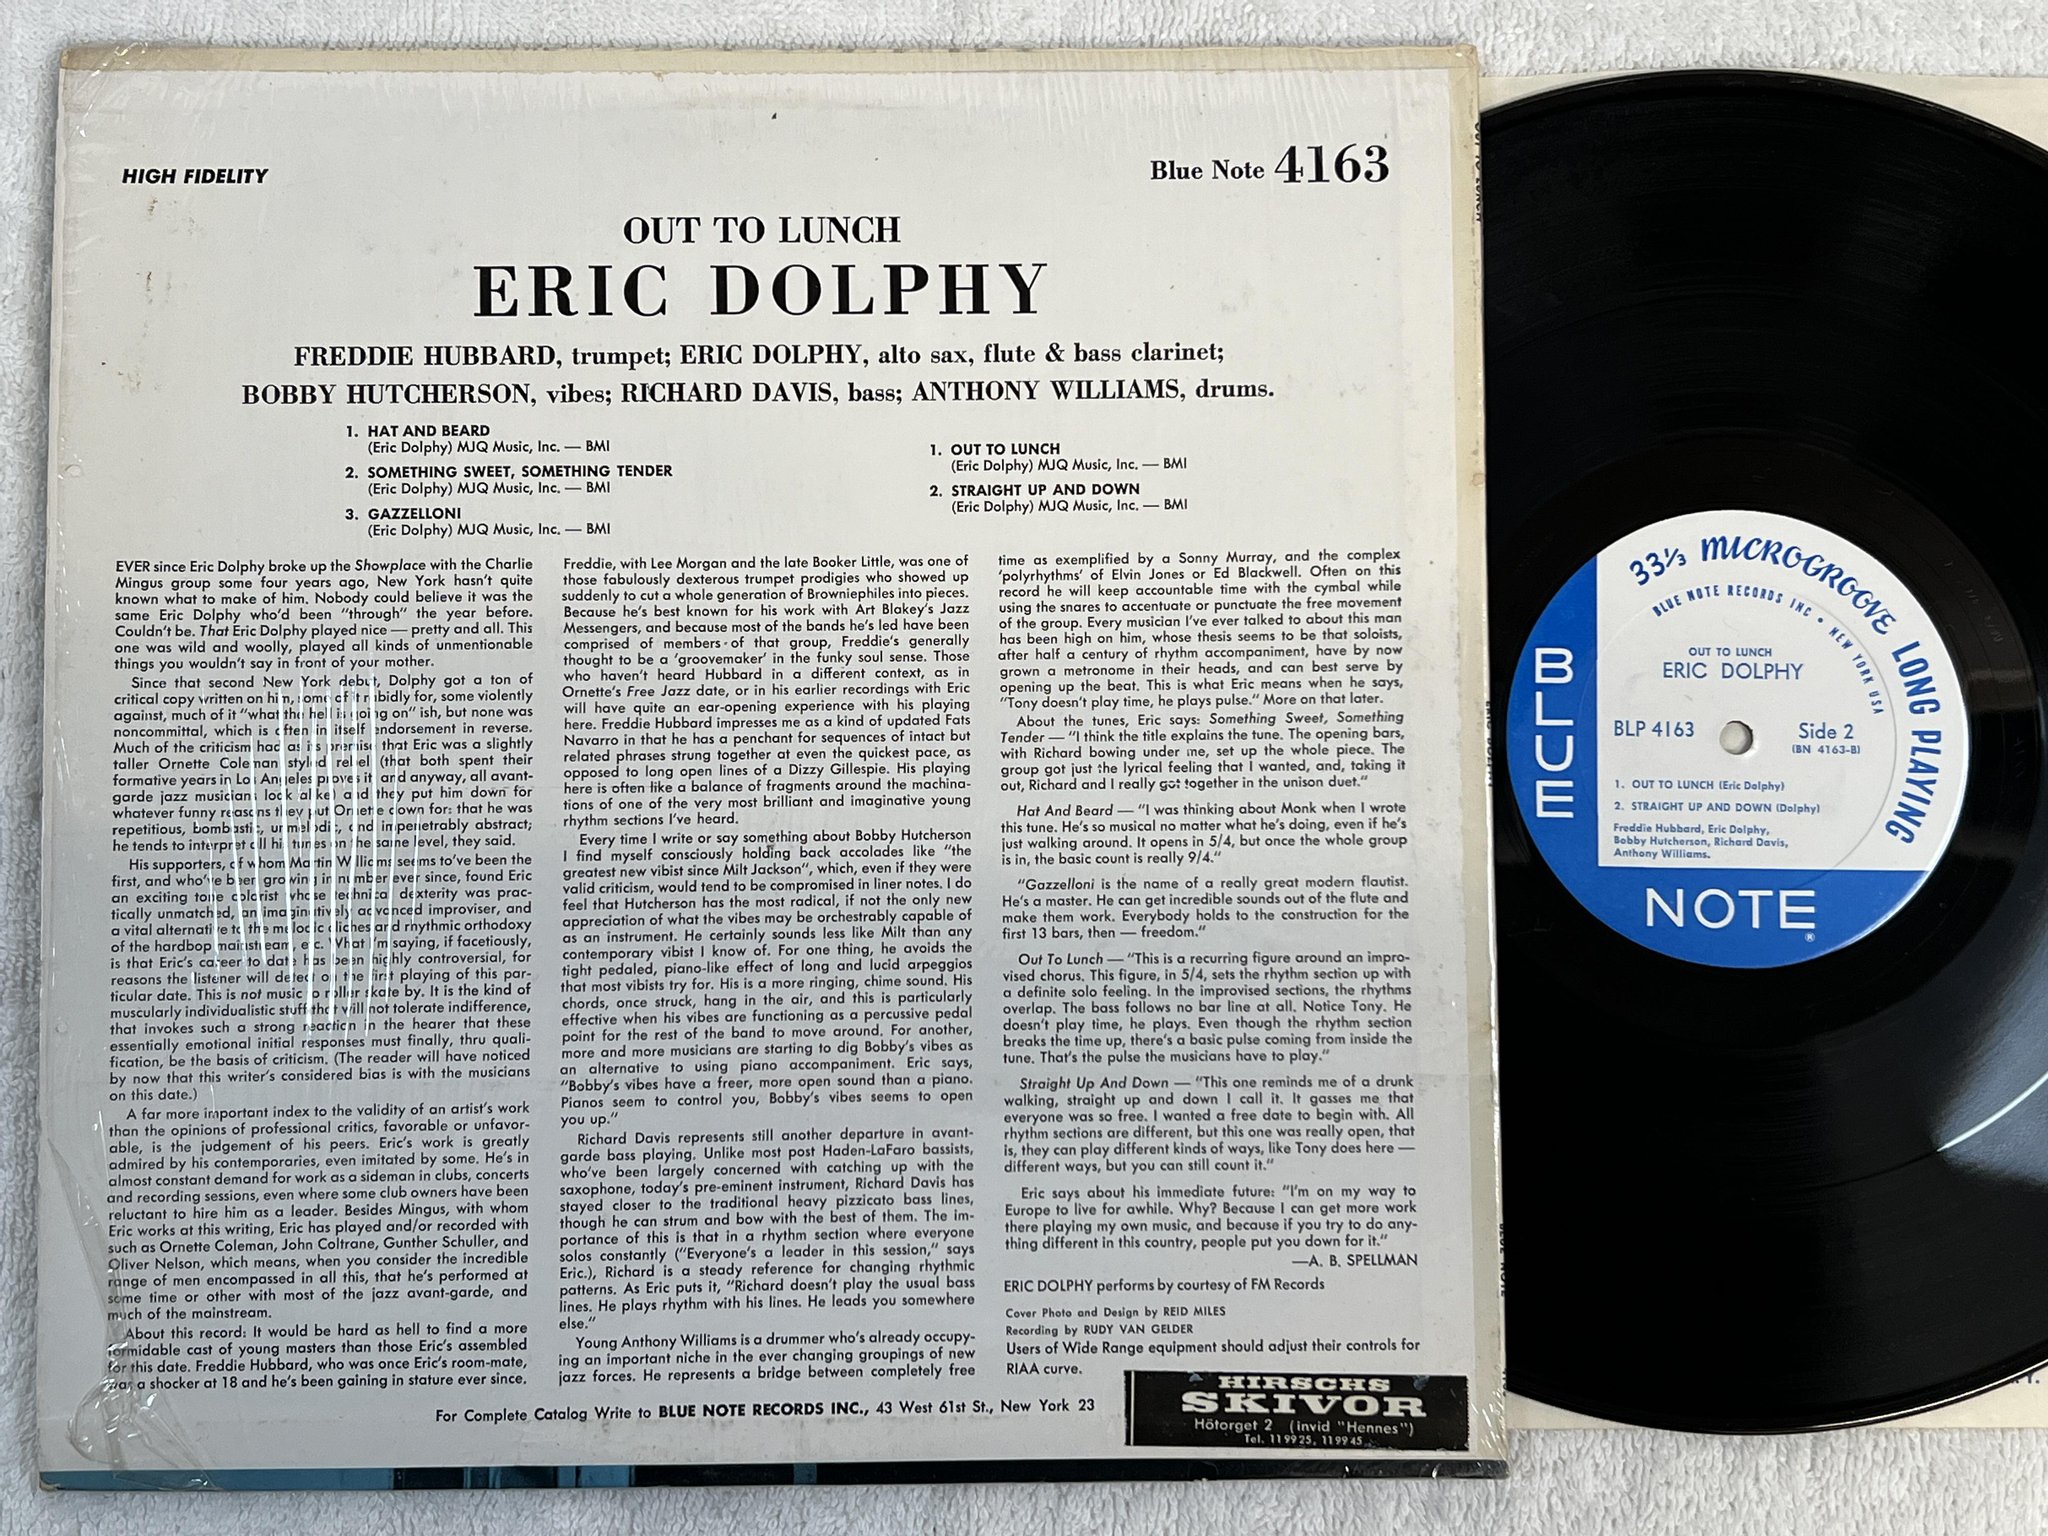 Omslagsbild för skivan ERIC DOLPHY Out To Lunch! LP -66 US BLUE NOTE BLP 4163 *** RARE JAZZ ***